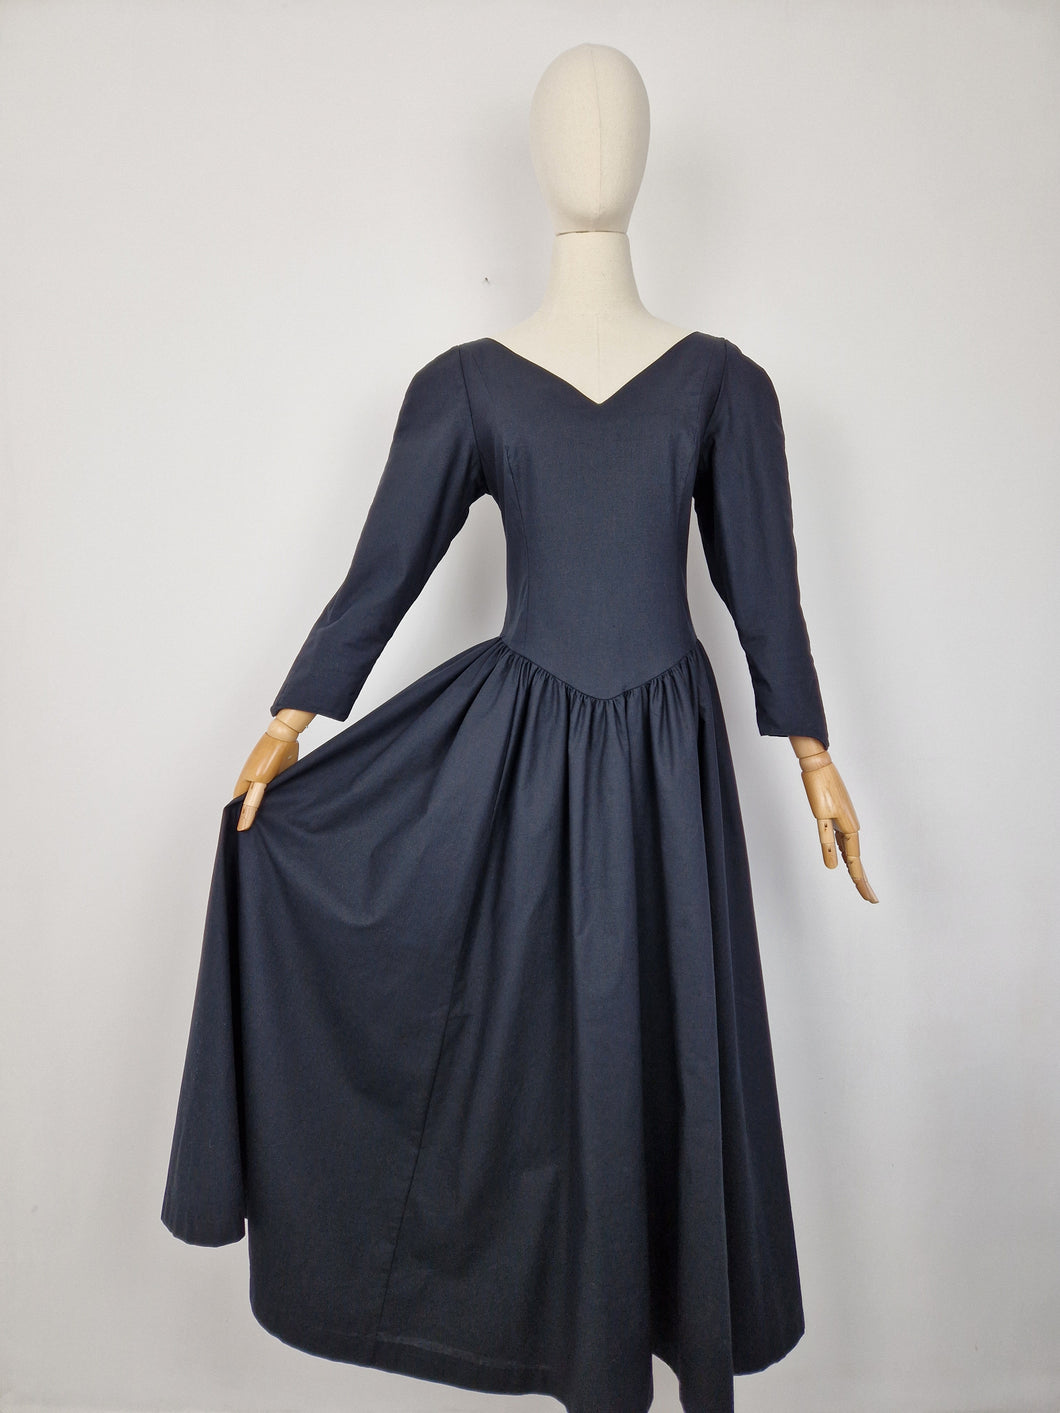 Vintage 80s Laura Ashley black ballgown dress